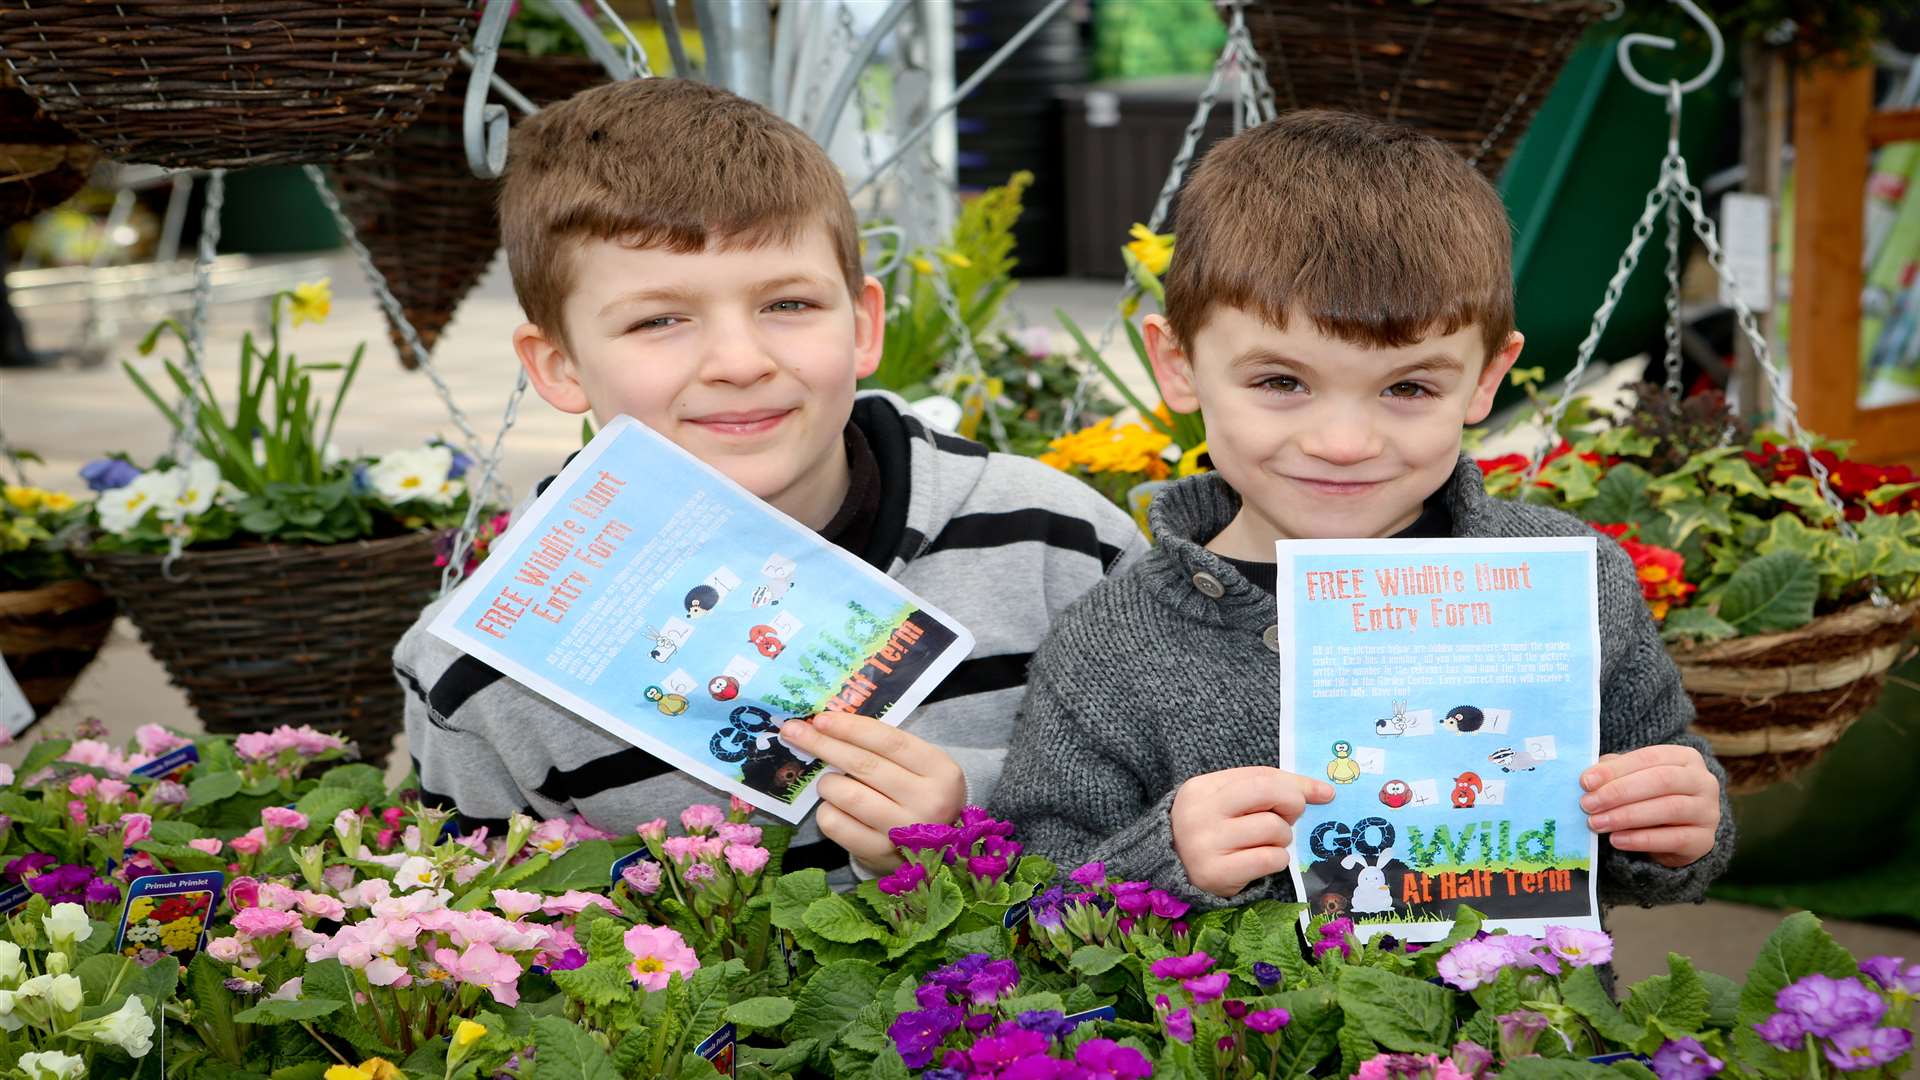 Go Wild half term activities for kids at Notcutts garden centre